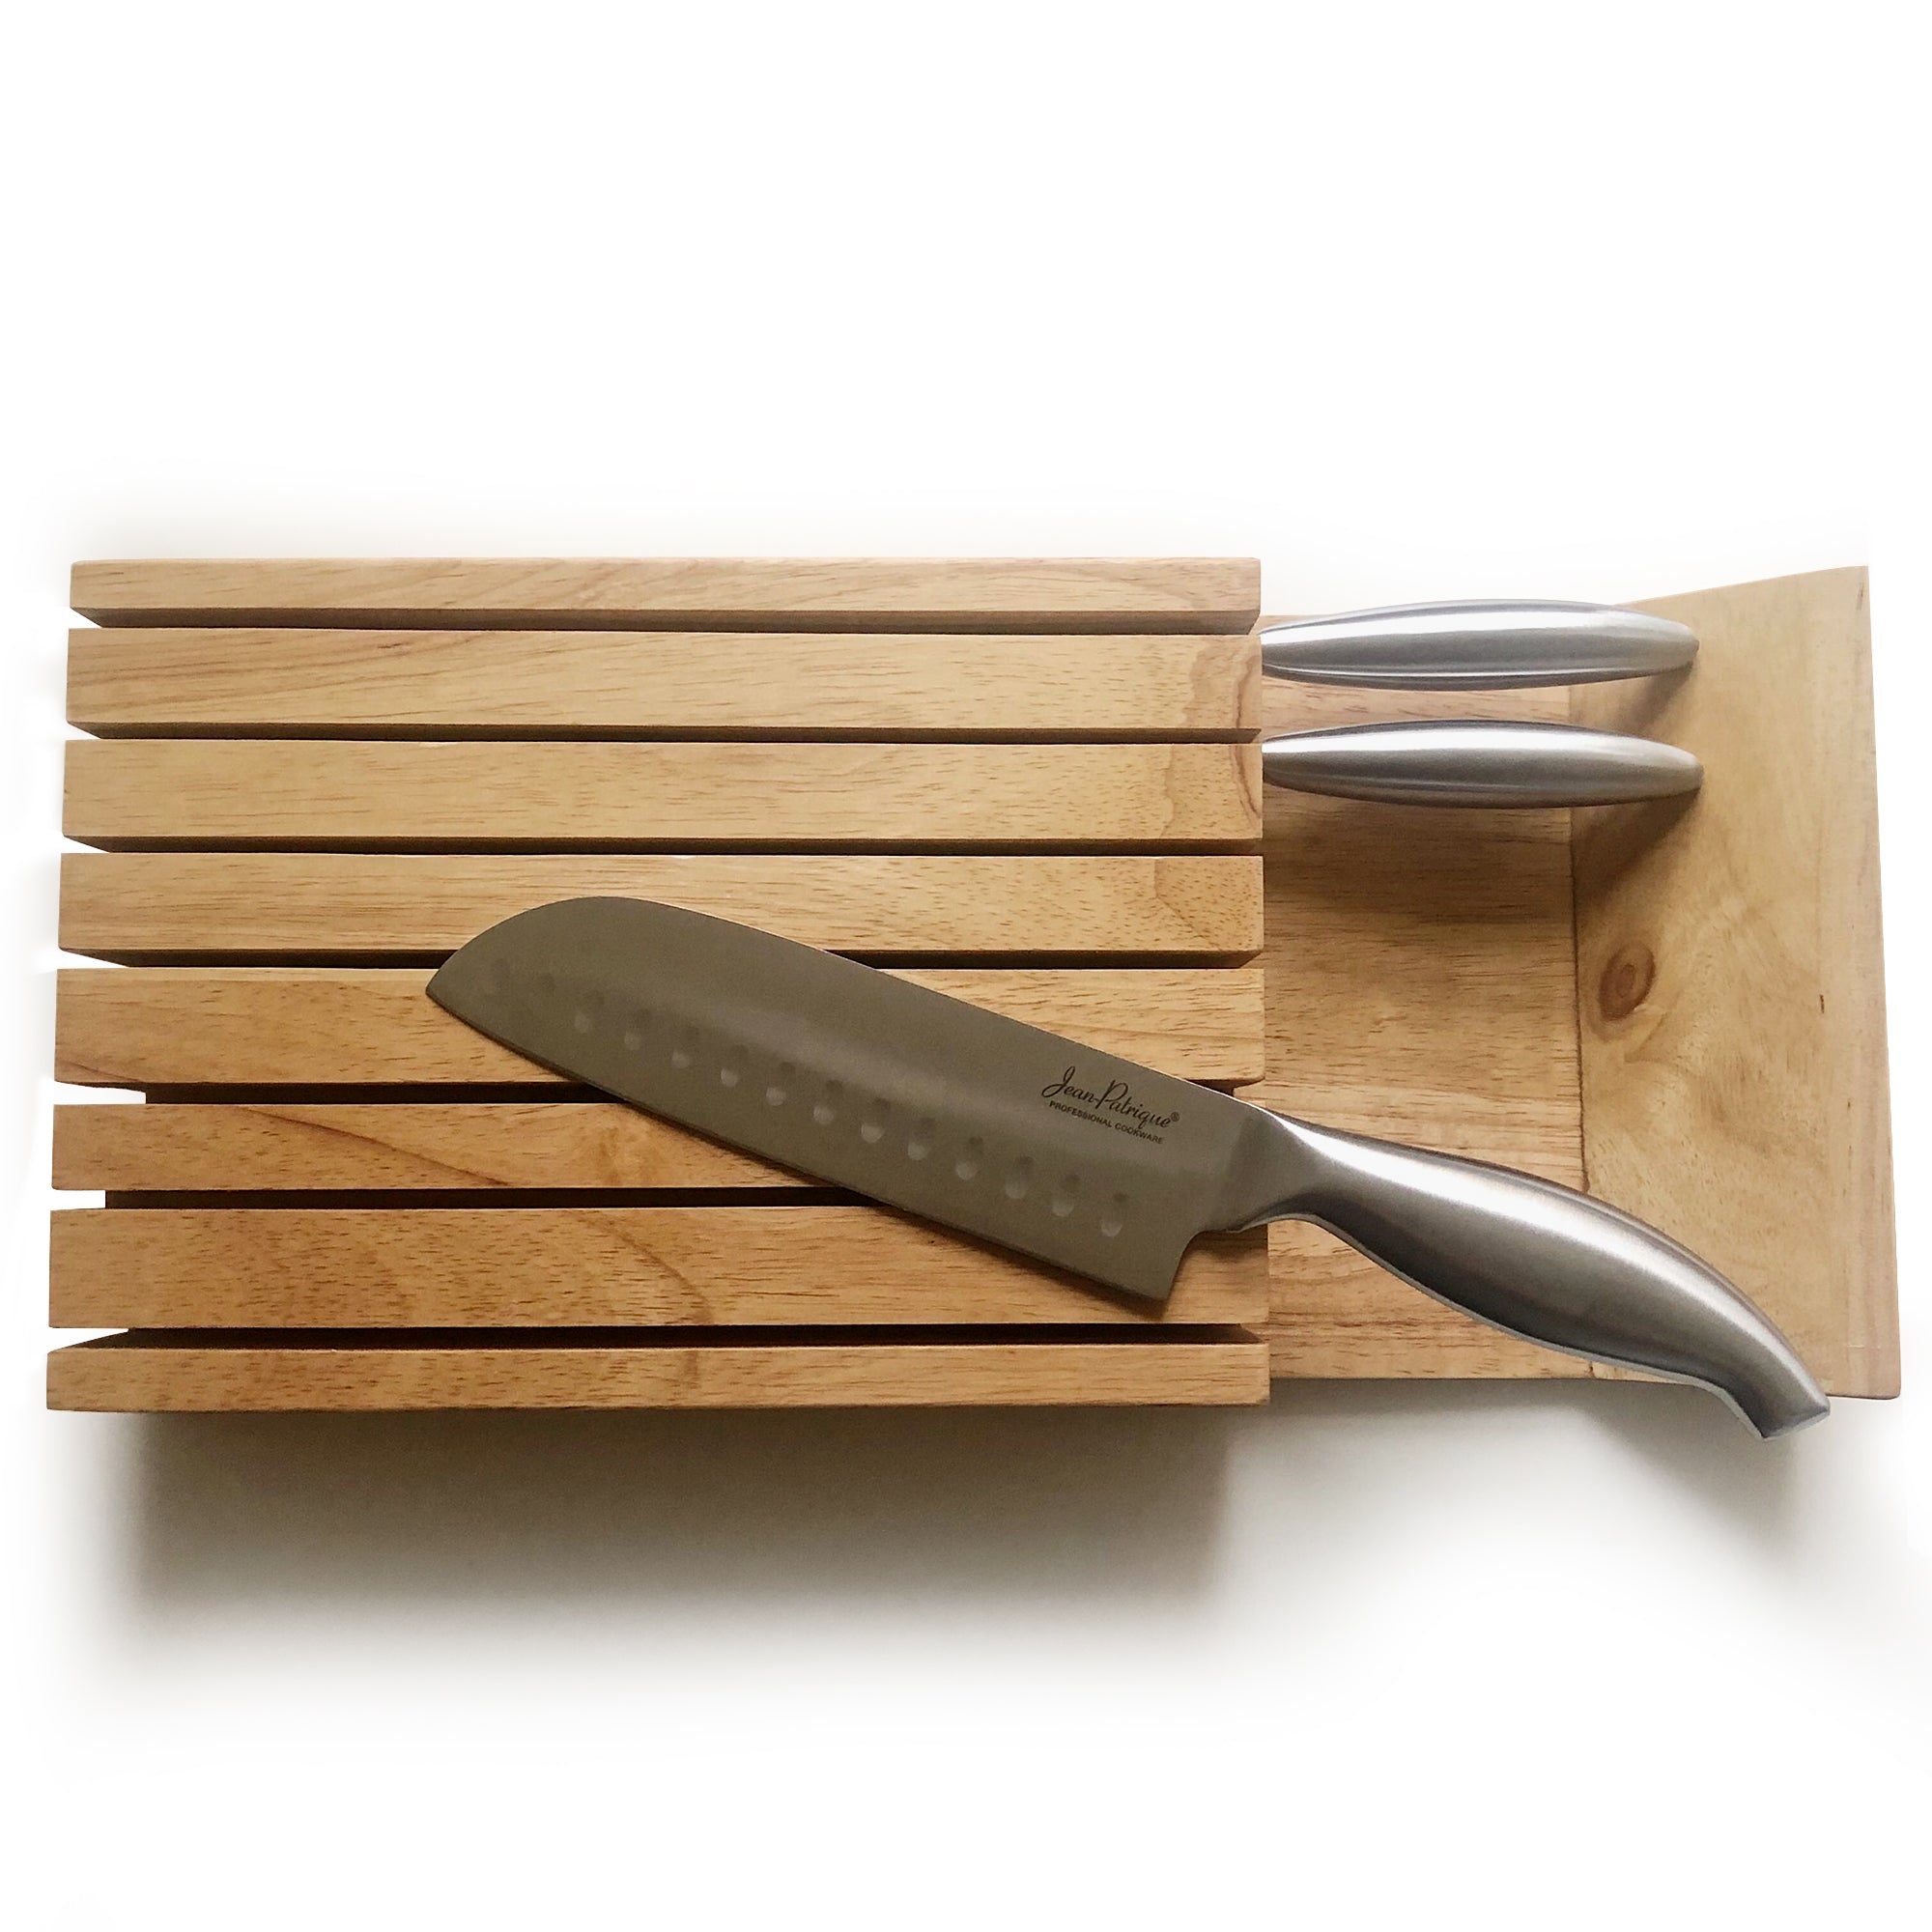 Knife Blocks and Storage